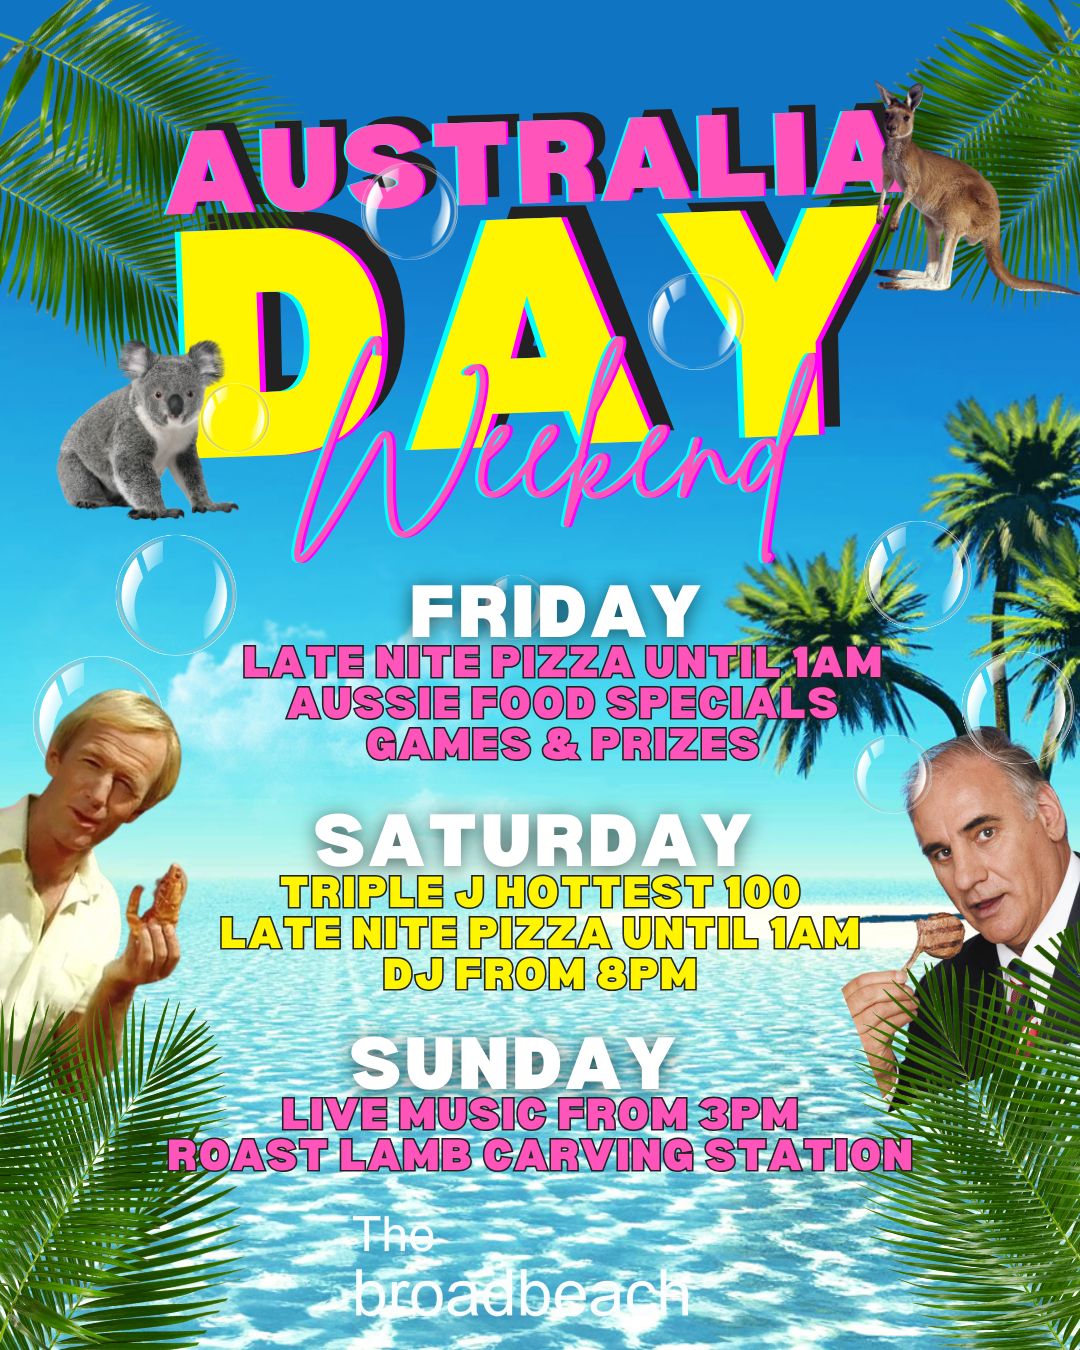 Australia Day at The Broadbeach (image supplied)